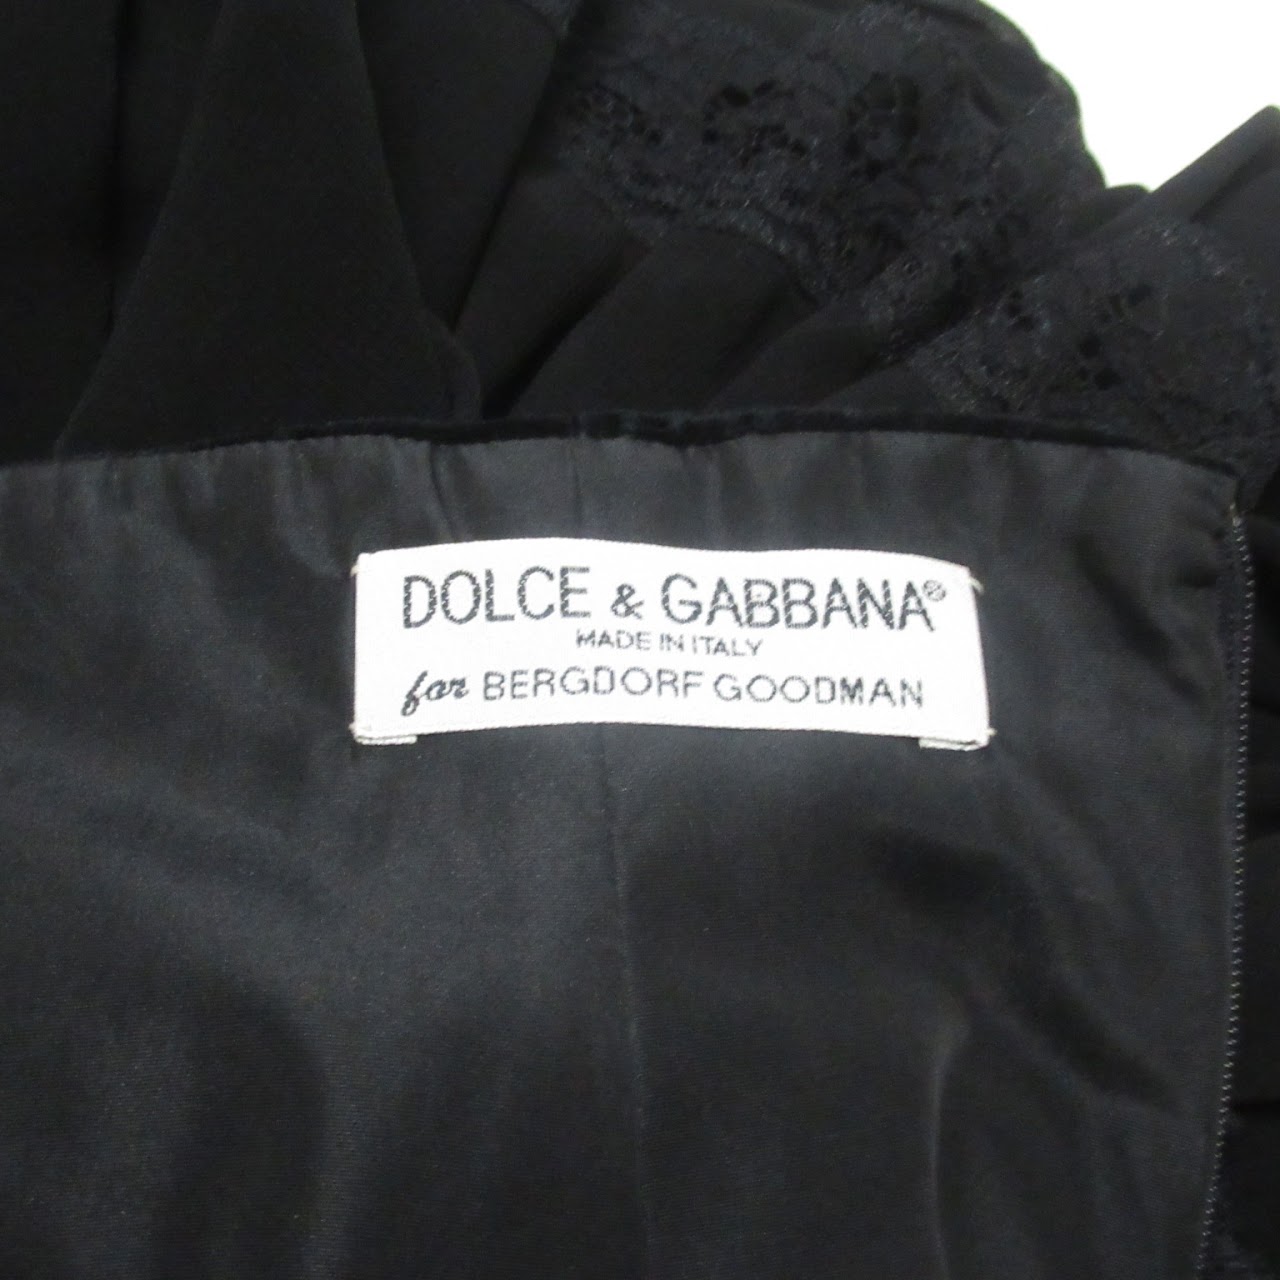 Dolce & Gabbana for Bergdorf Goodman Fringe & Lace Strapless Dress